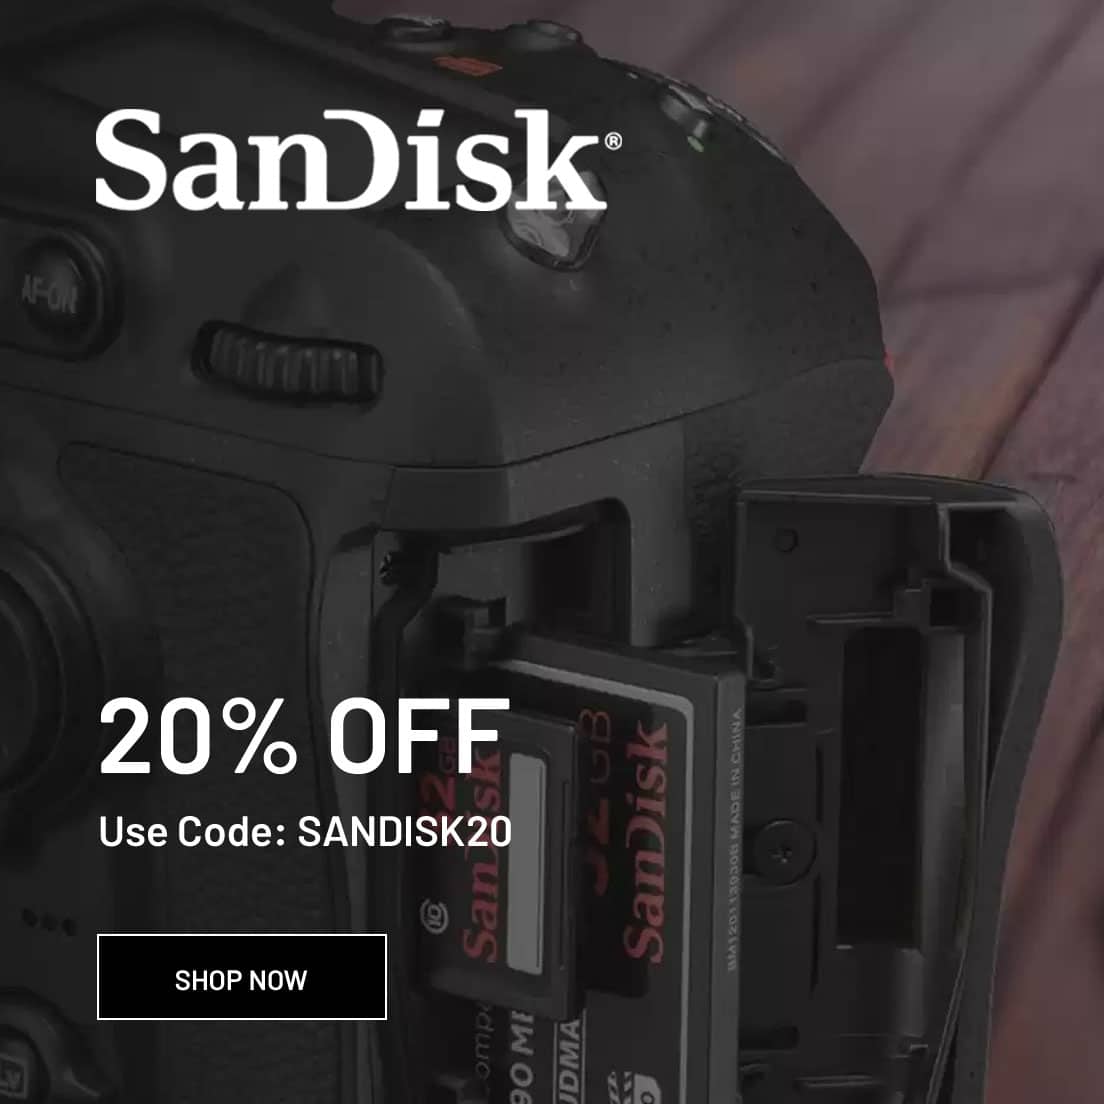 SanDisk Offers - 20% OFF SALE